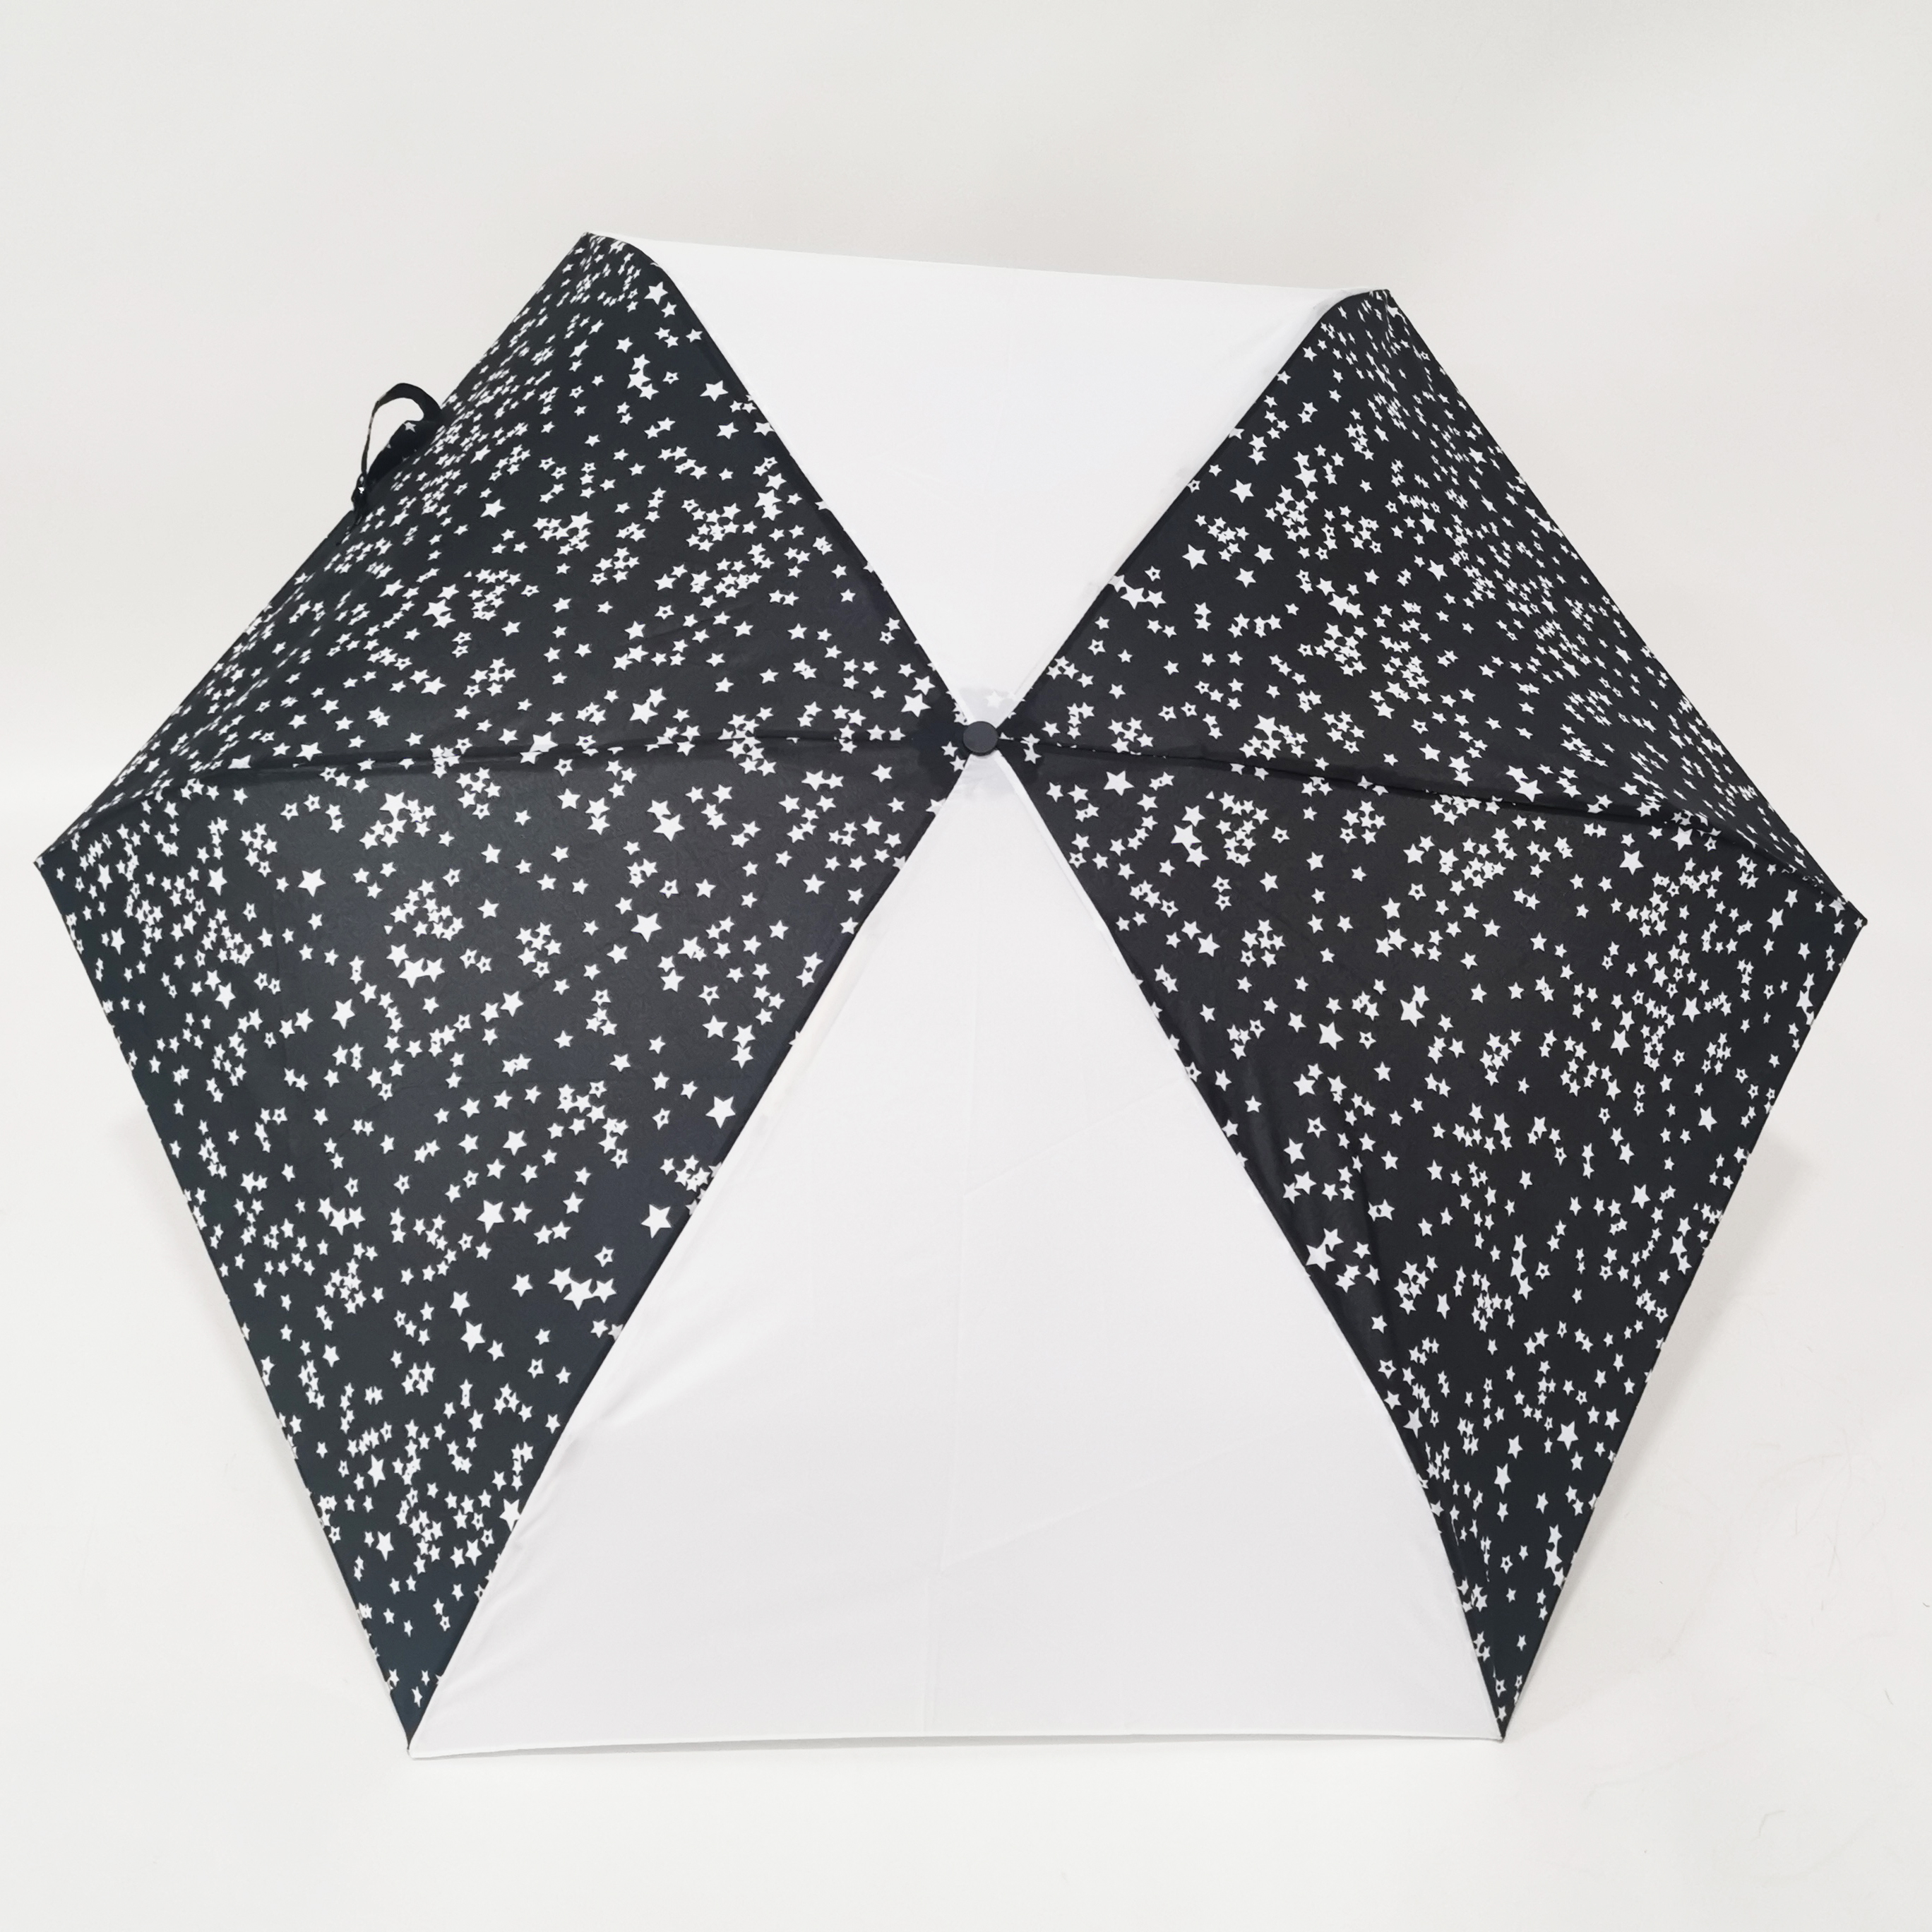 https://www.hodaumbrella.com/just-205g-an-trois-folding-umbrella-product/